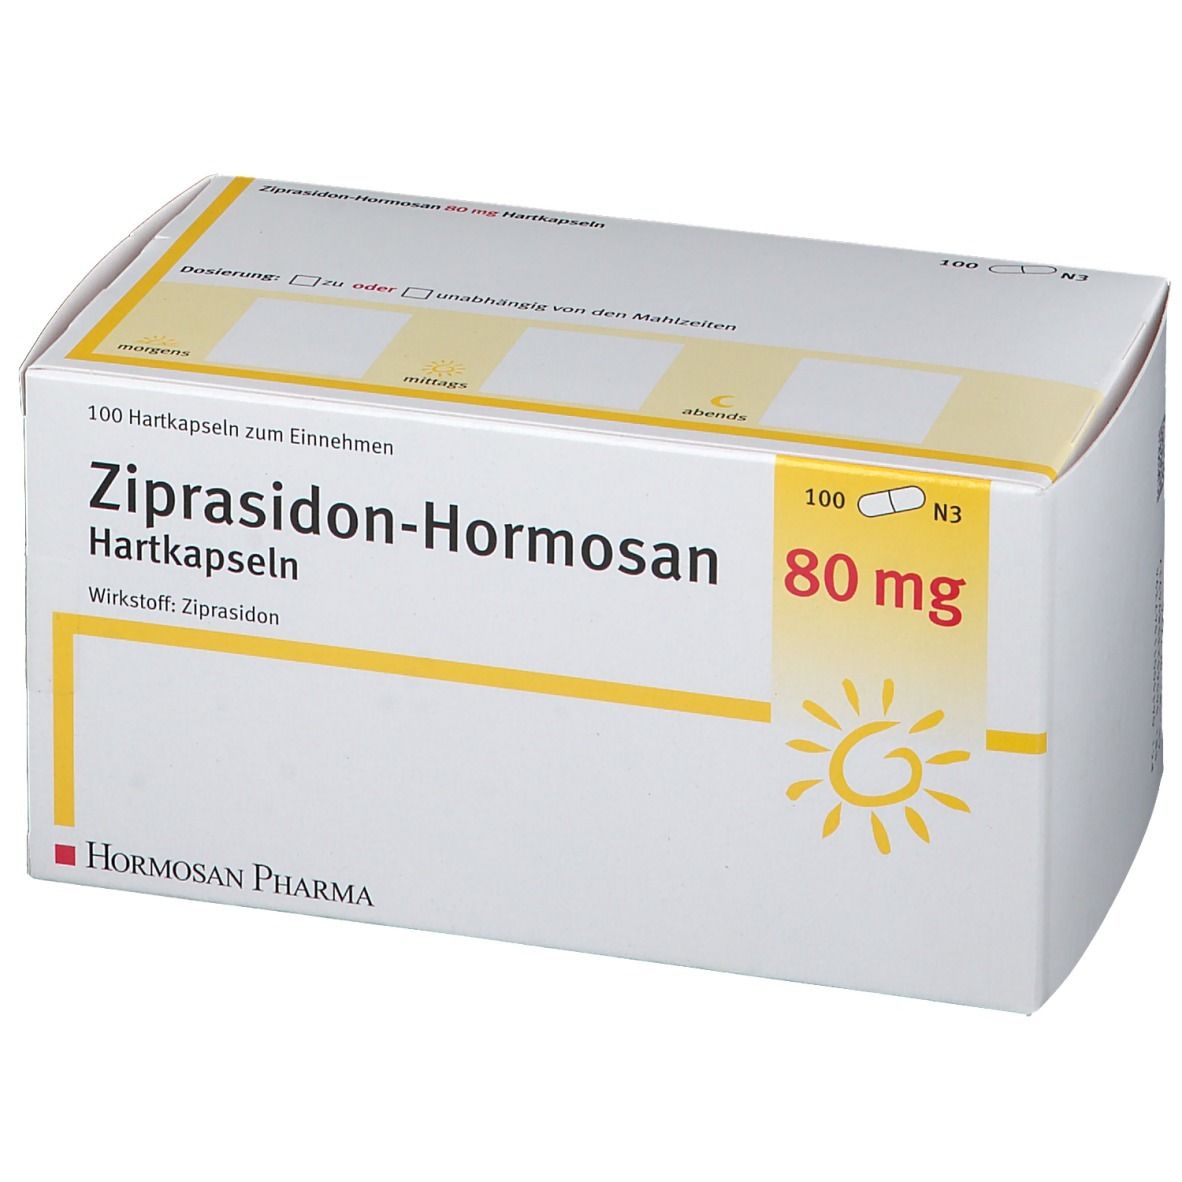 Ziprasidon-Hormosan 80 mg